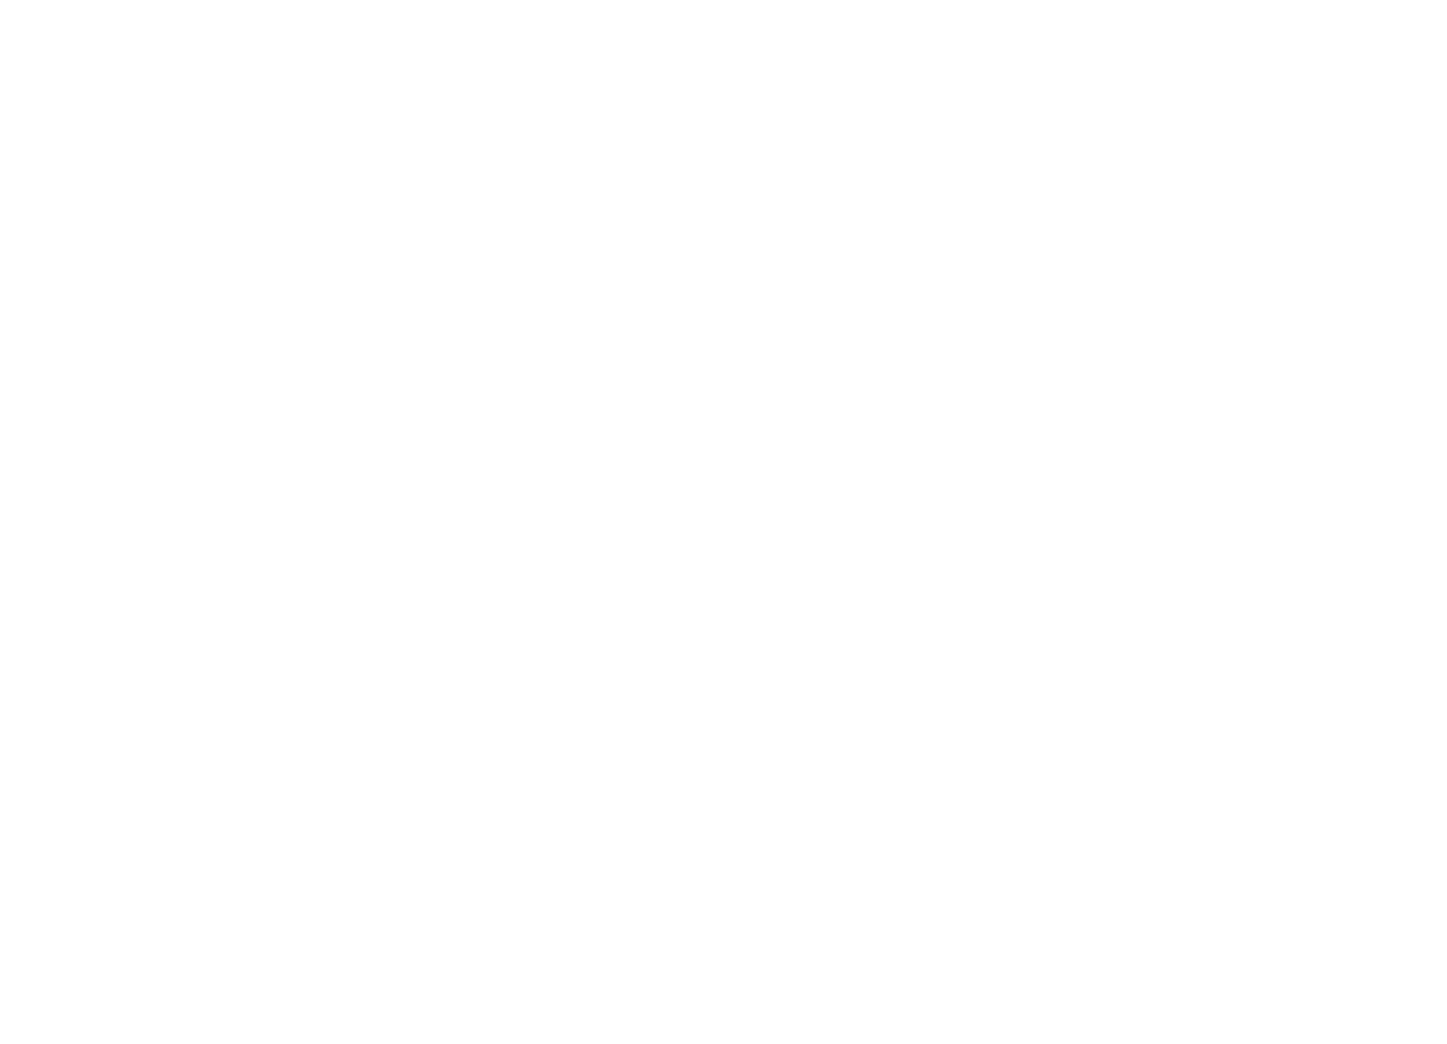 www.absuppressor.com